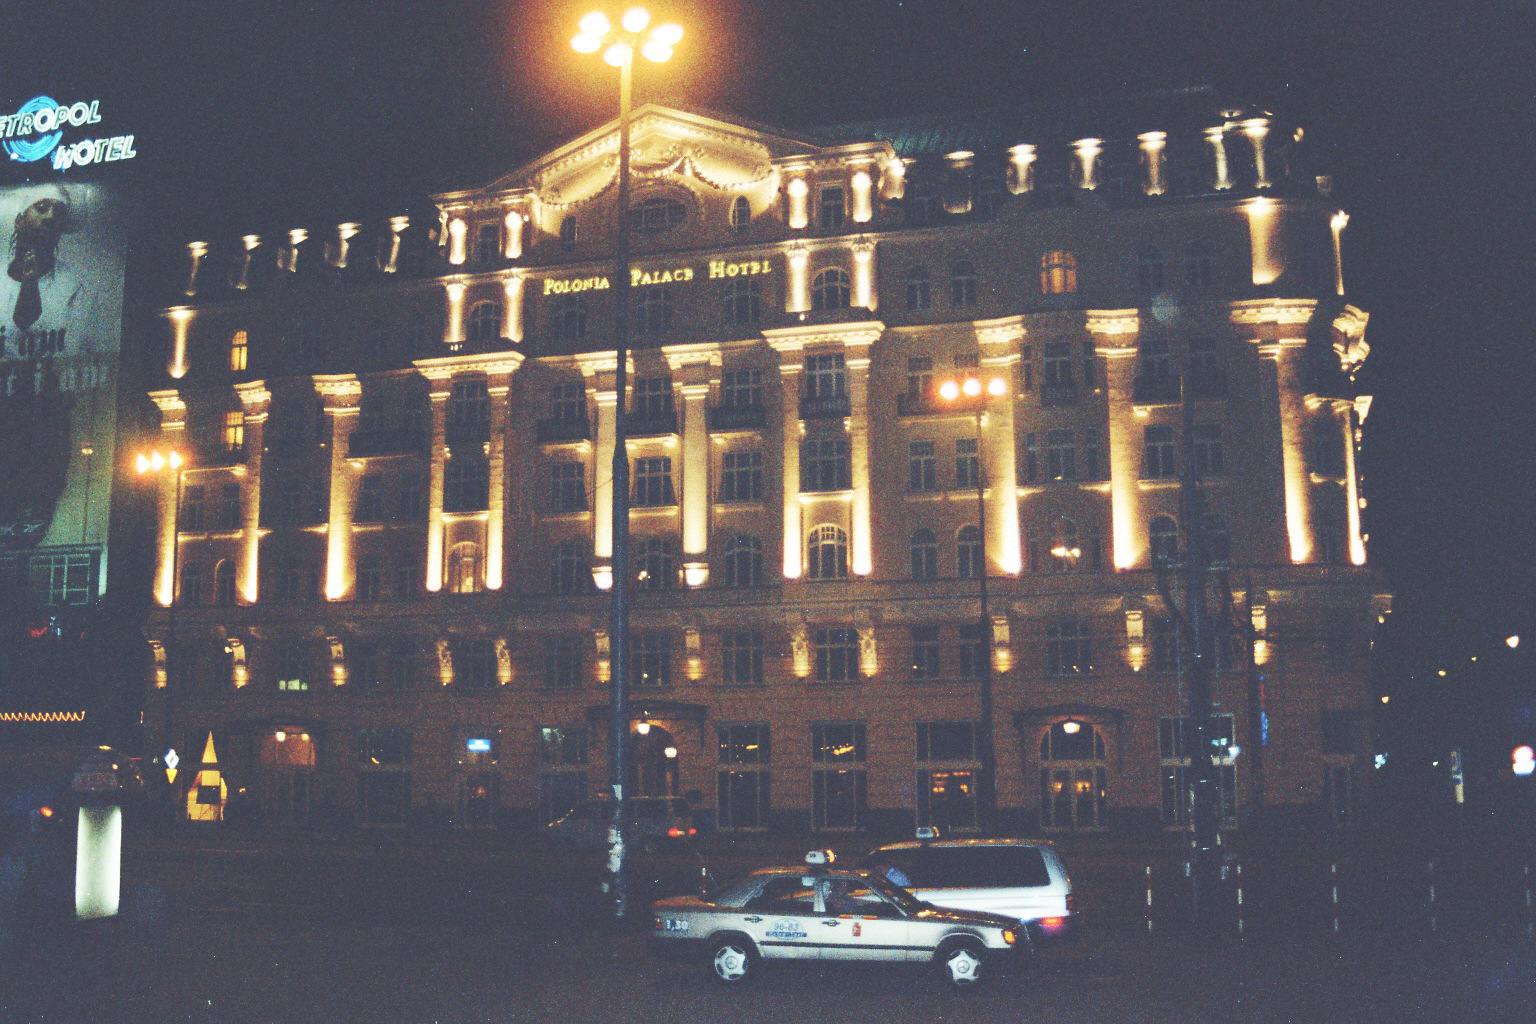 Warschau: Polonia Palace Hotel bei Nacht